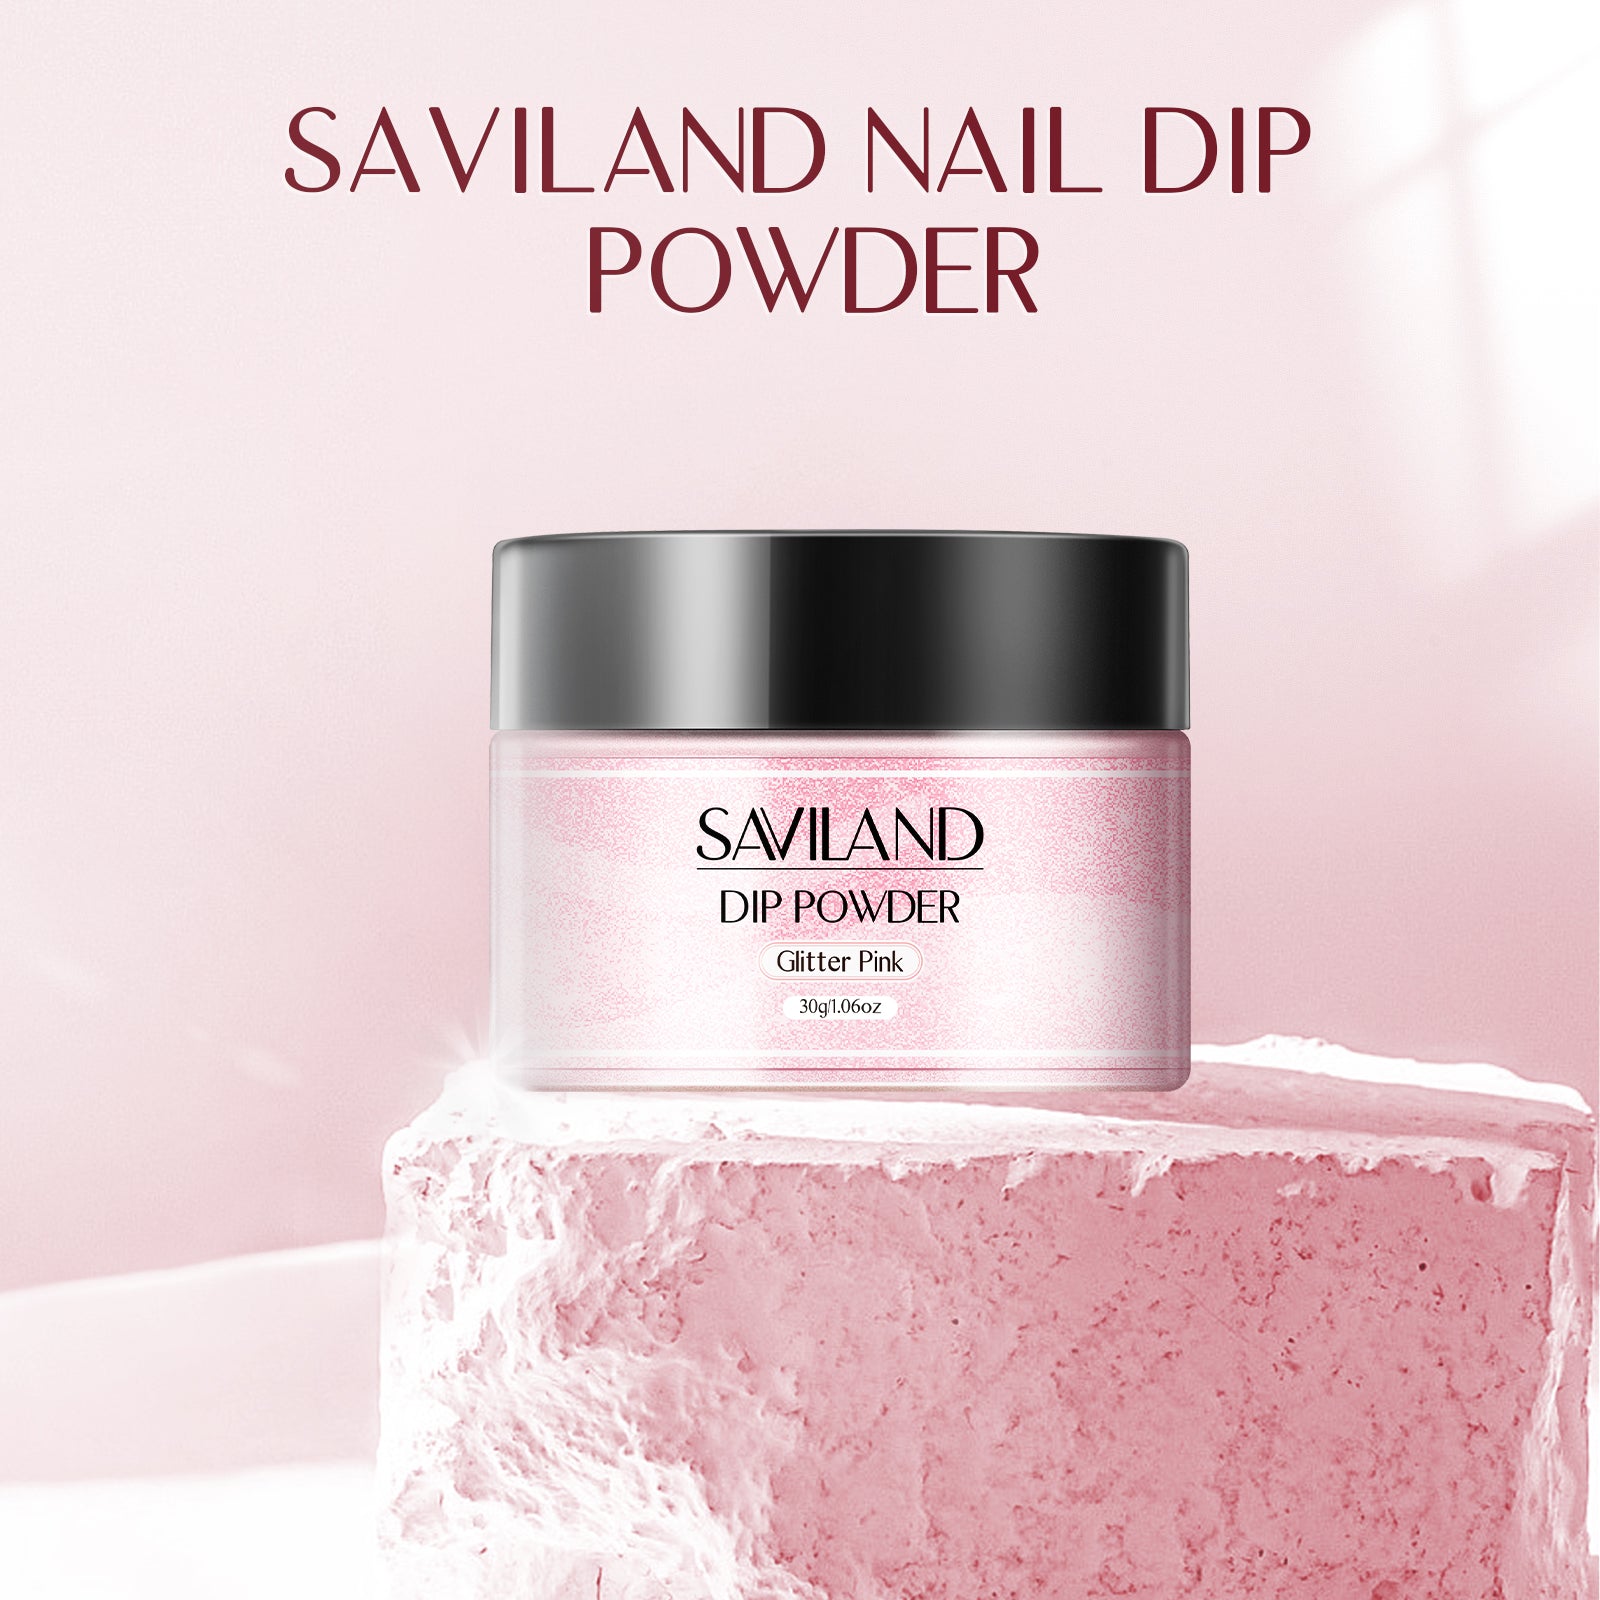 [US ONLY]Glitter Pink Dip Powder - 1.06Oz